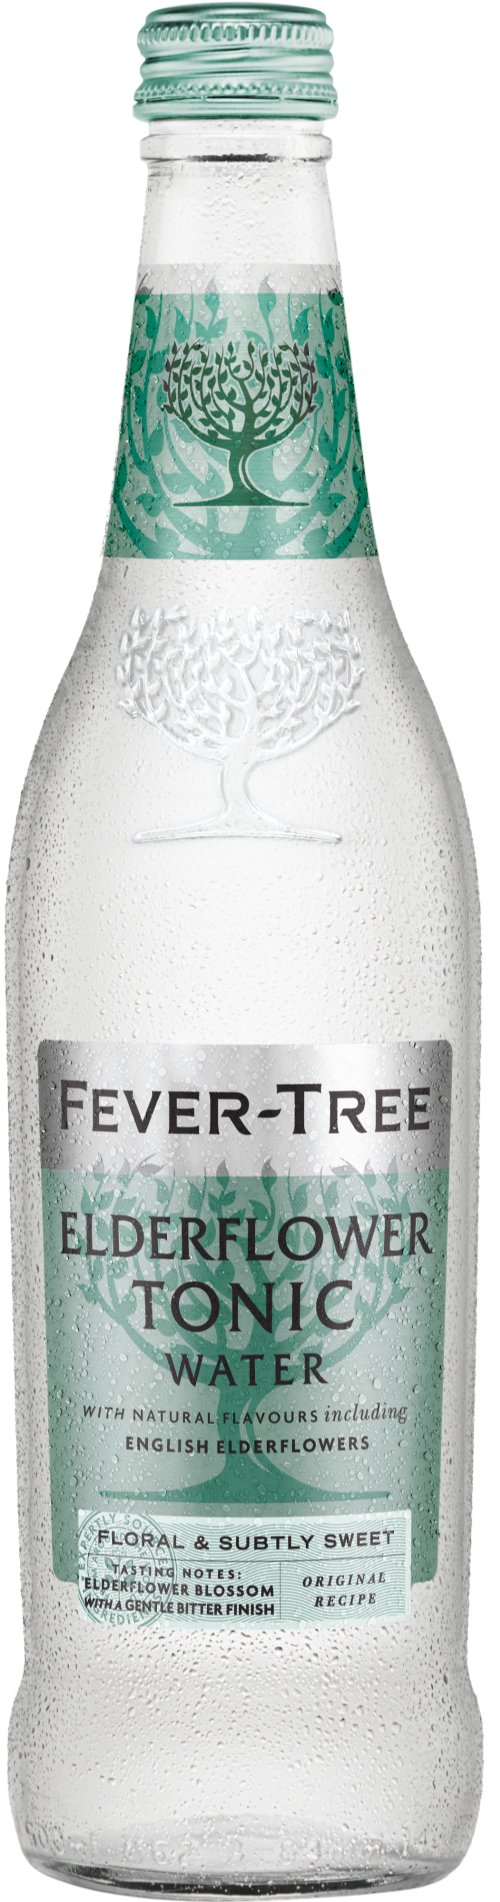 FEVER-TREE Elderflower Tonic Water 500ml